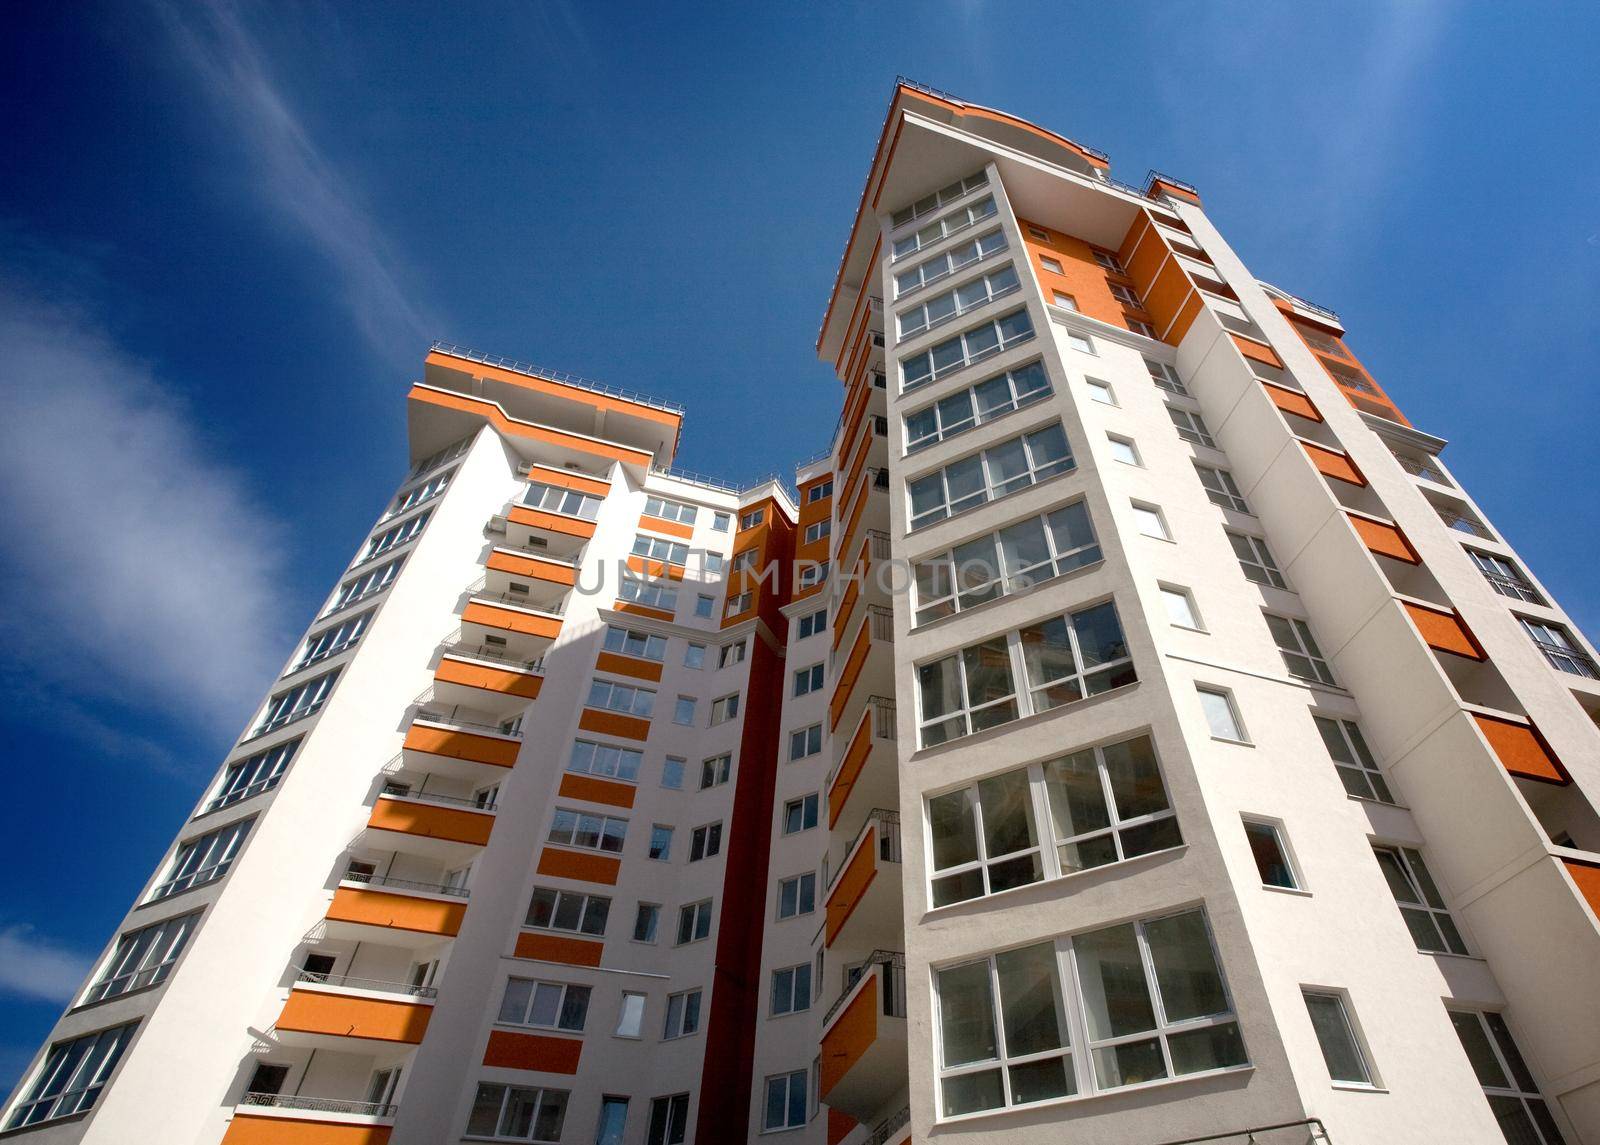 Modern apartment building against blue sky background